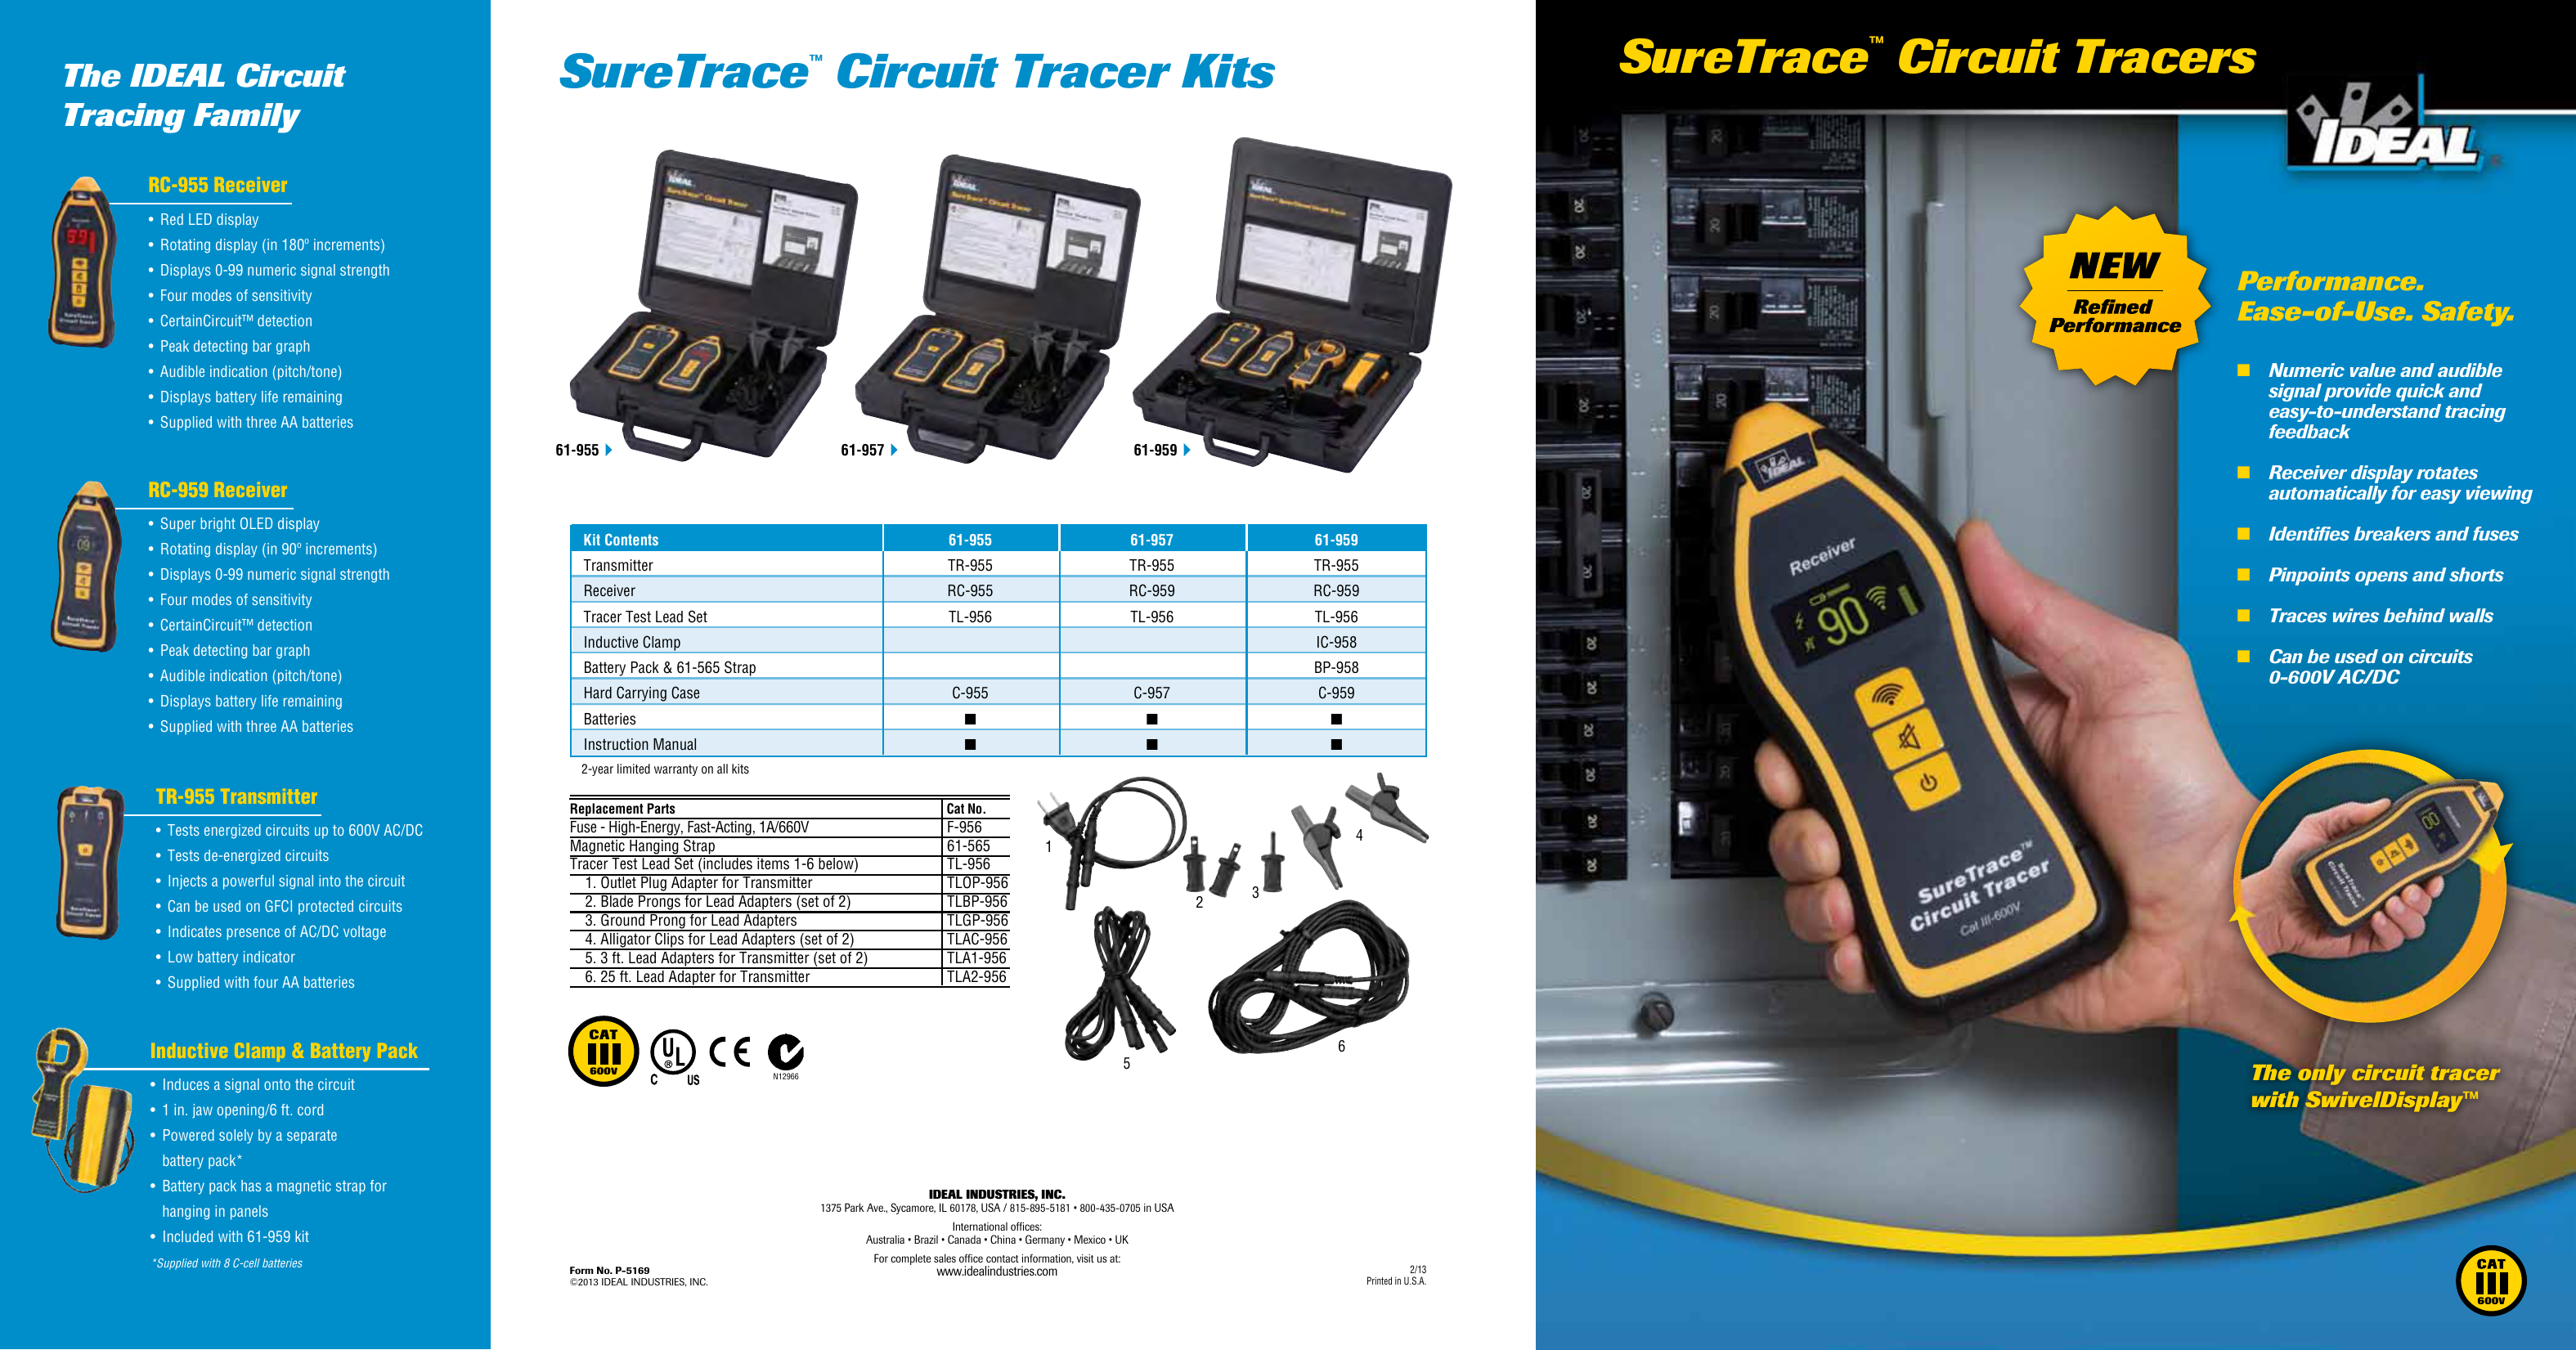 Ideal 61-957 SureTrace Open//Closed Circuit Tracer Kit